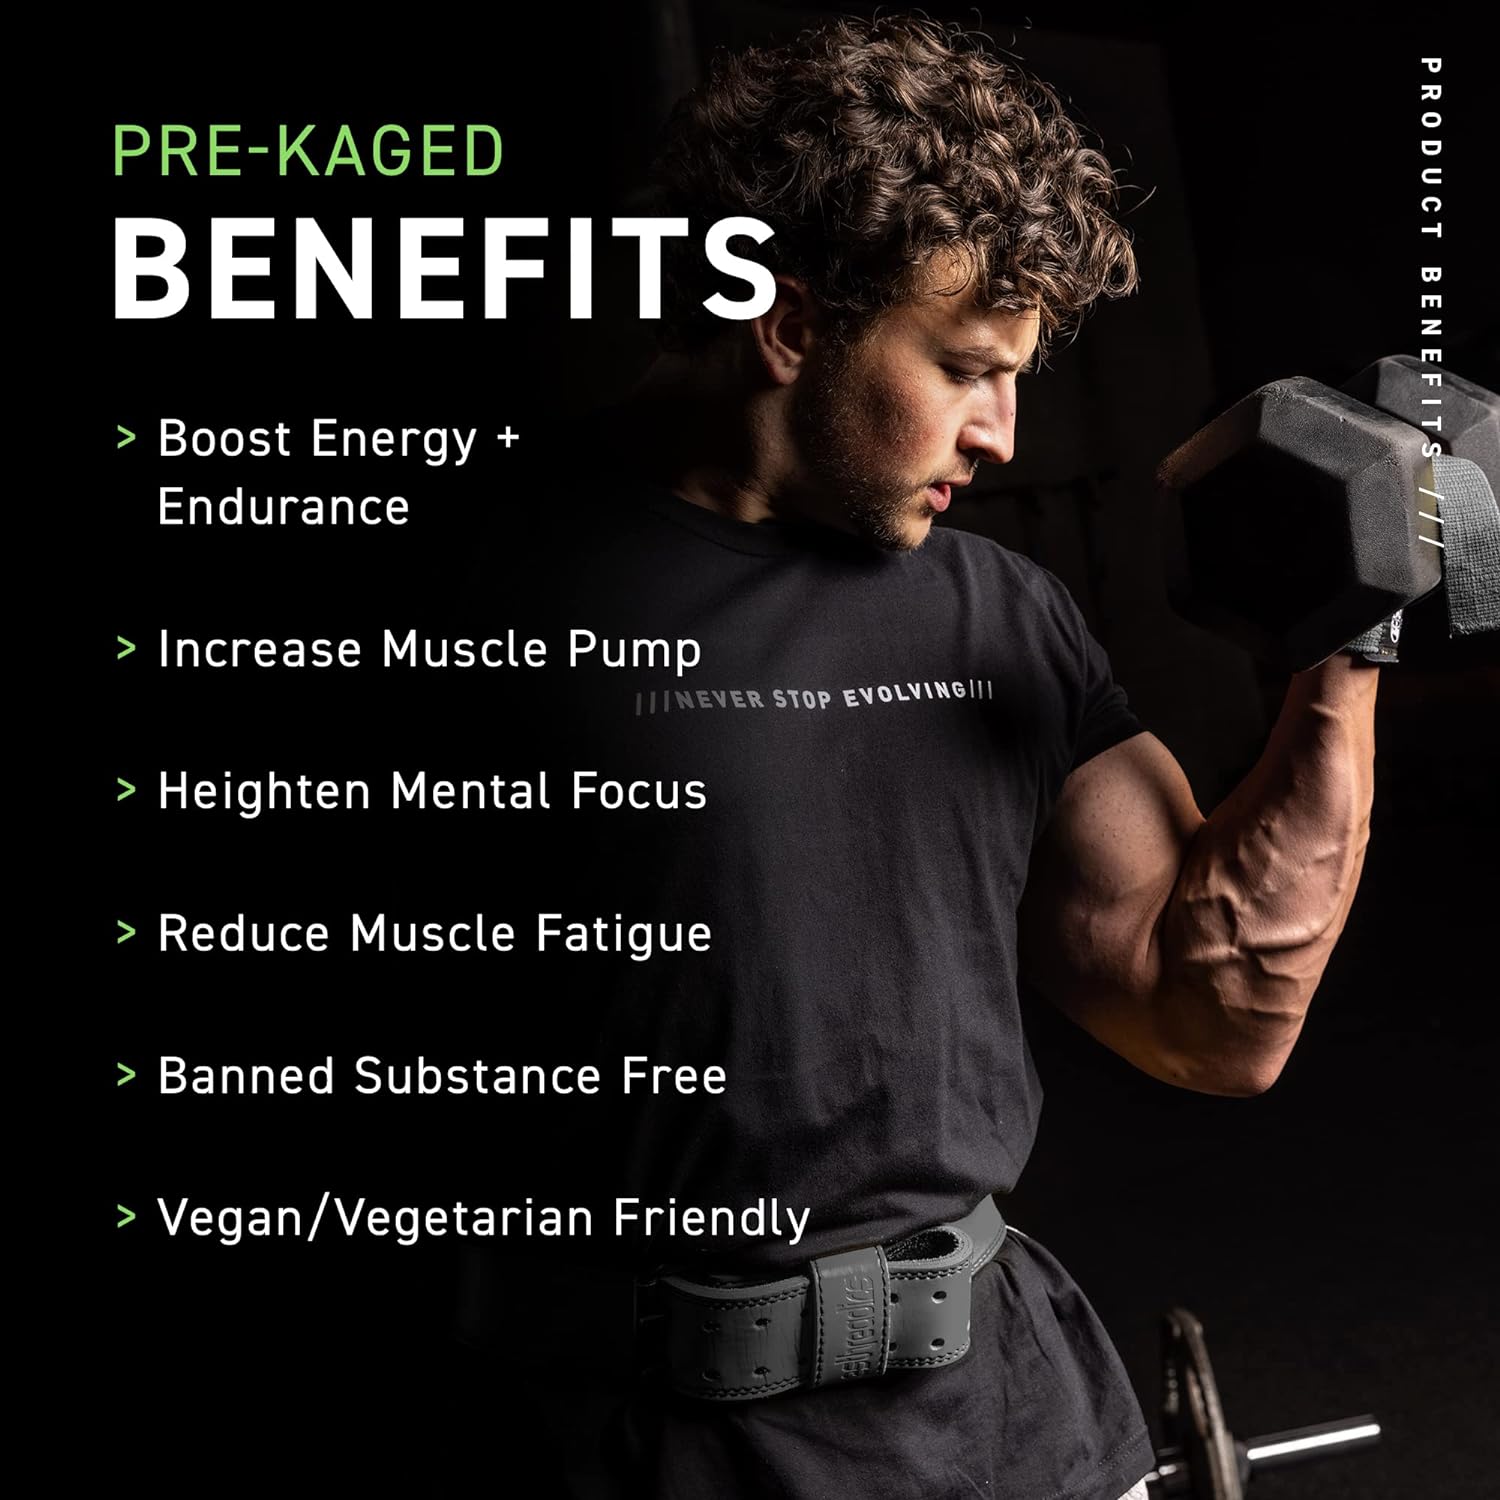 Kaged Original Pre Workout Powder | Orange Krush | Pre-Kaged | Formula